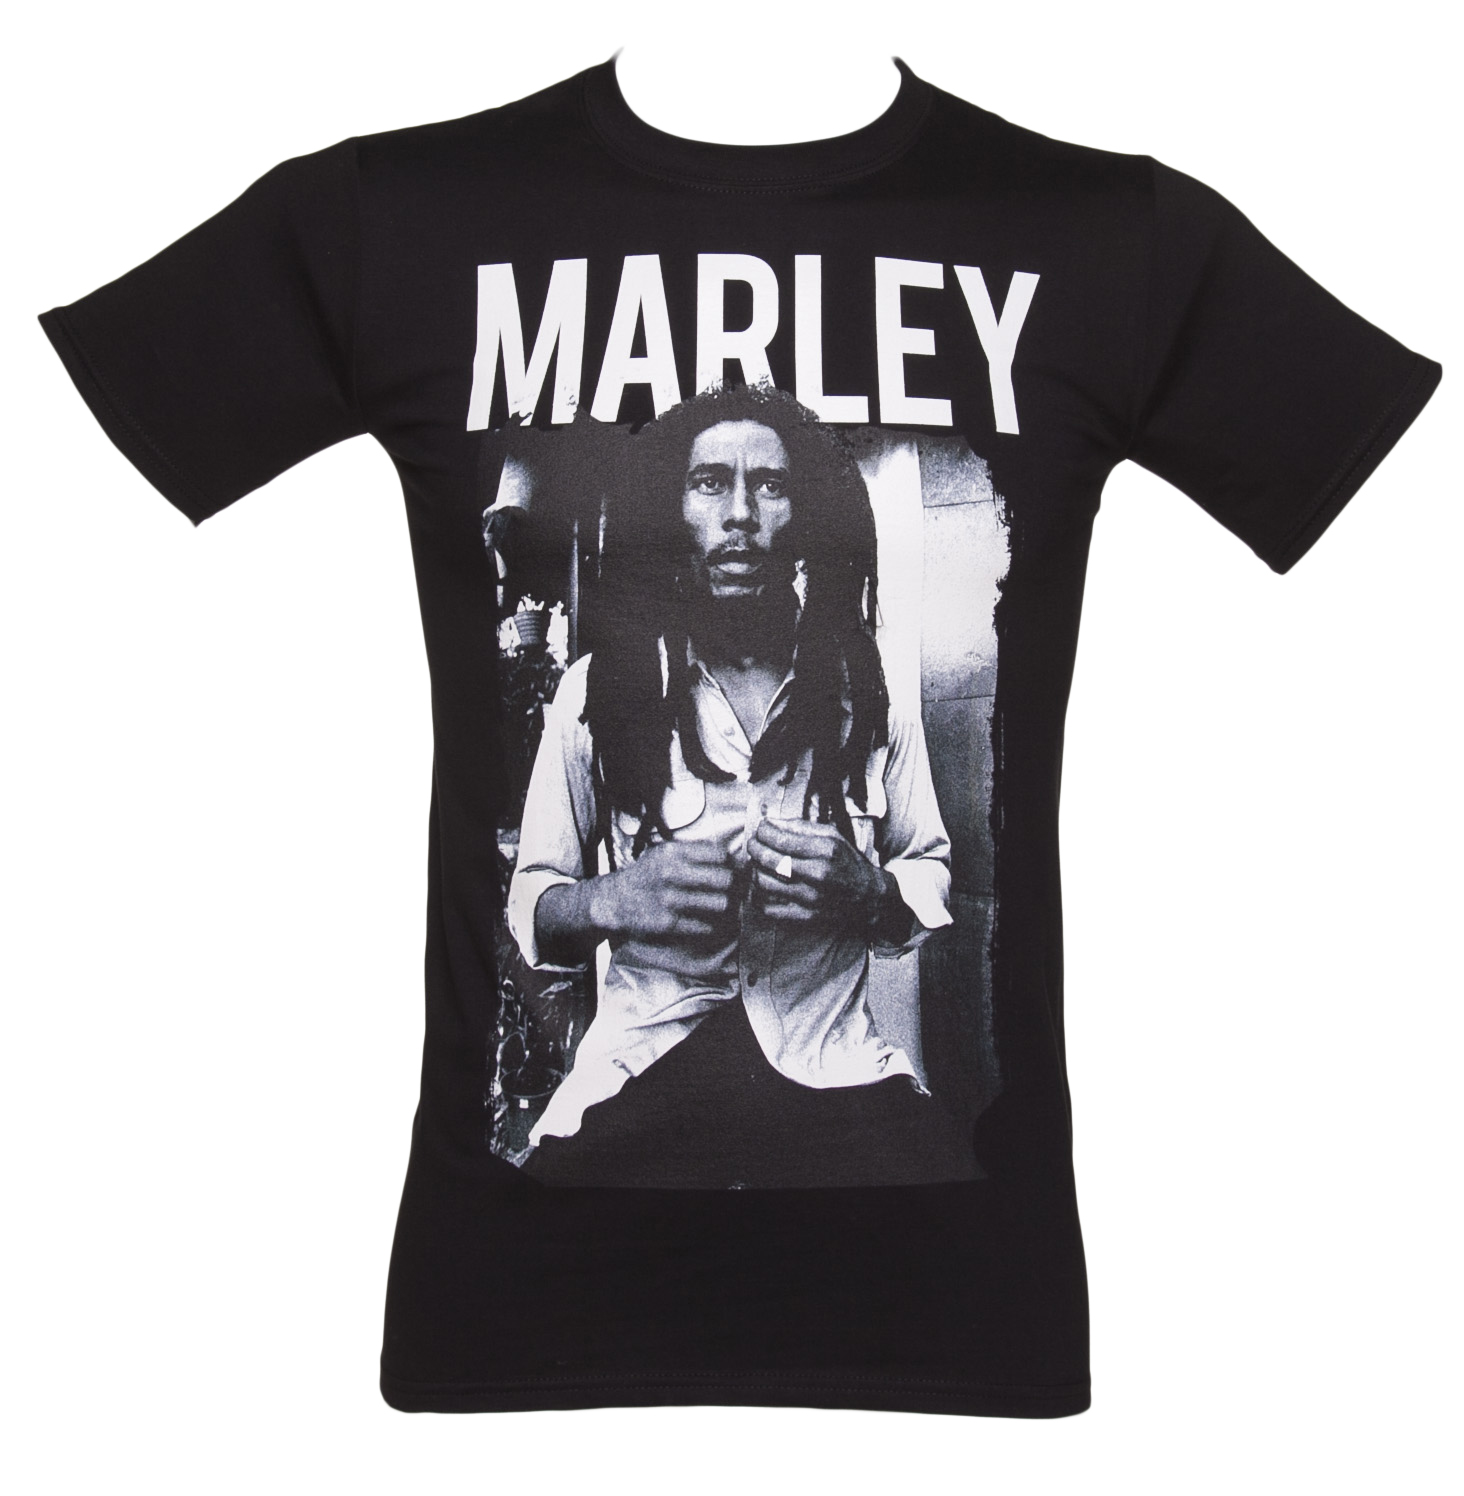 Bob Marley Black and White T-Shirt